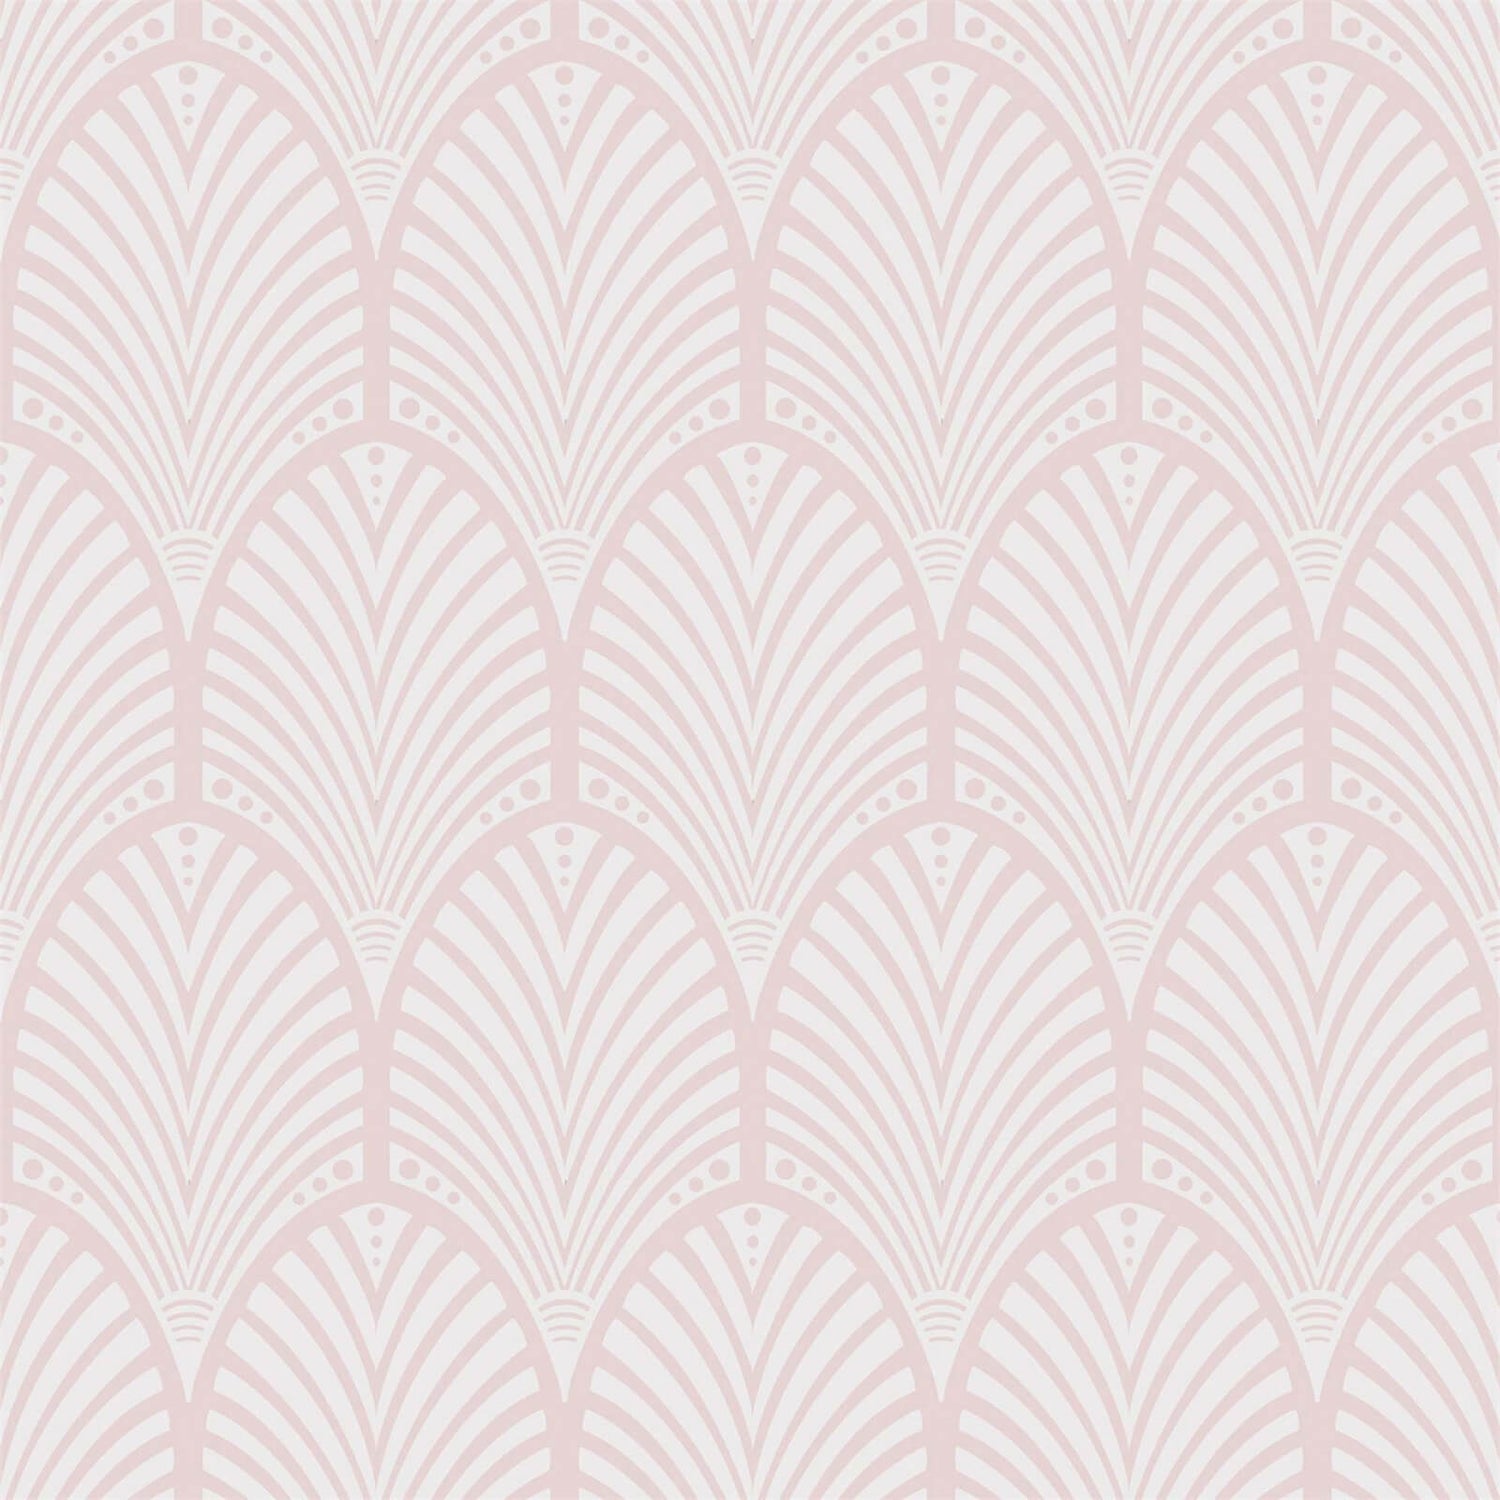 Buy Online - Black And Pink Art Deco Wallpaper in US